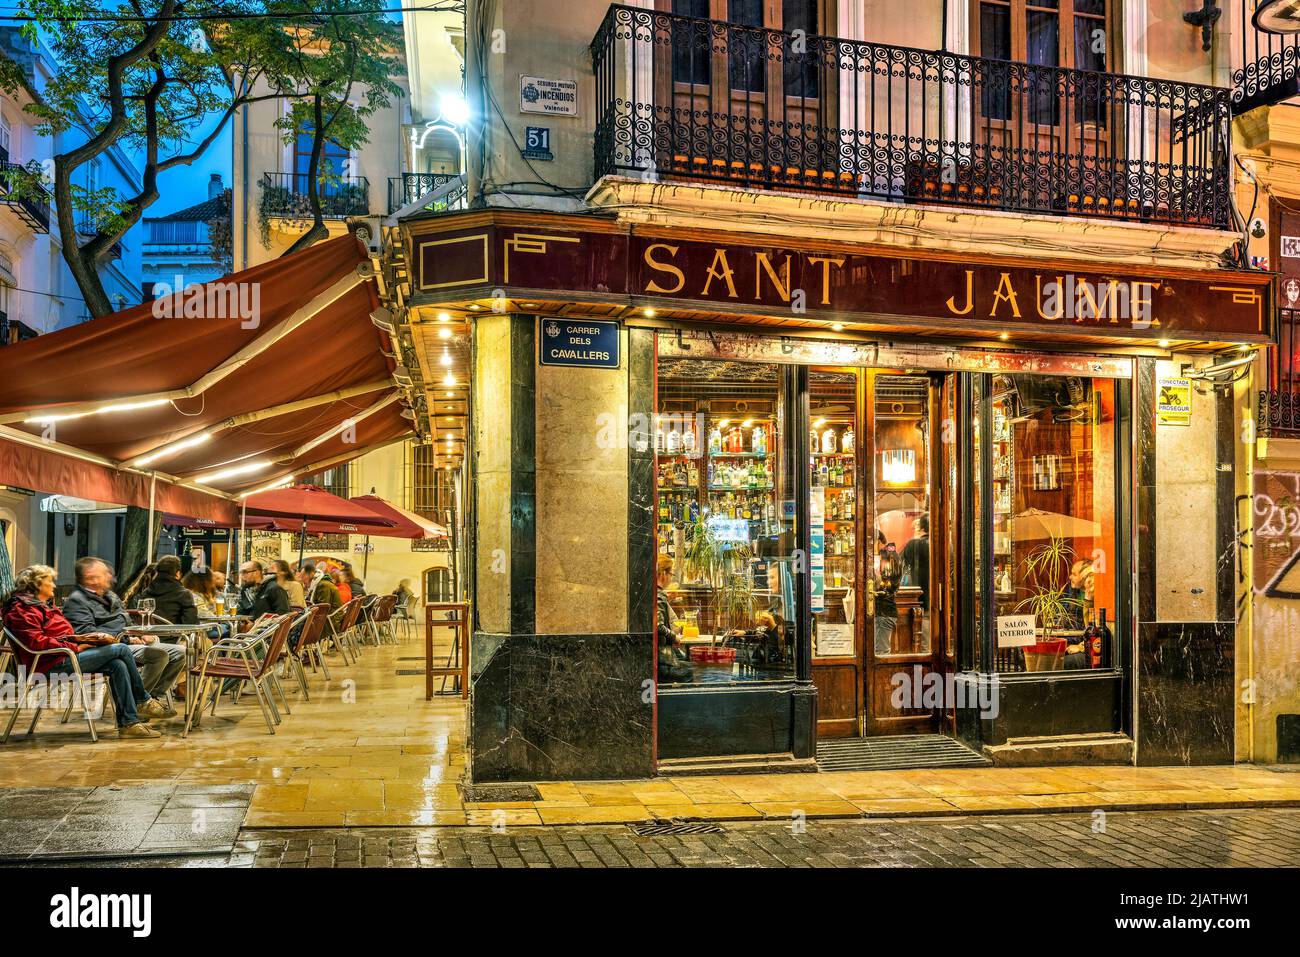 Cafe Sant Jaume, El Carmen neighborhood, Valencia, Valencian Community, Spain Stock Photo